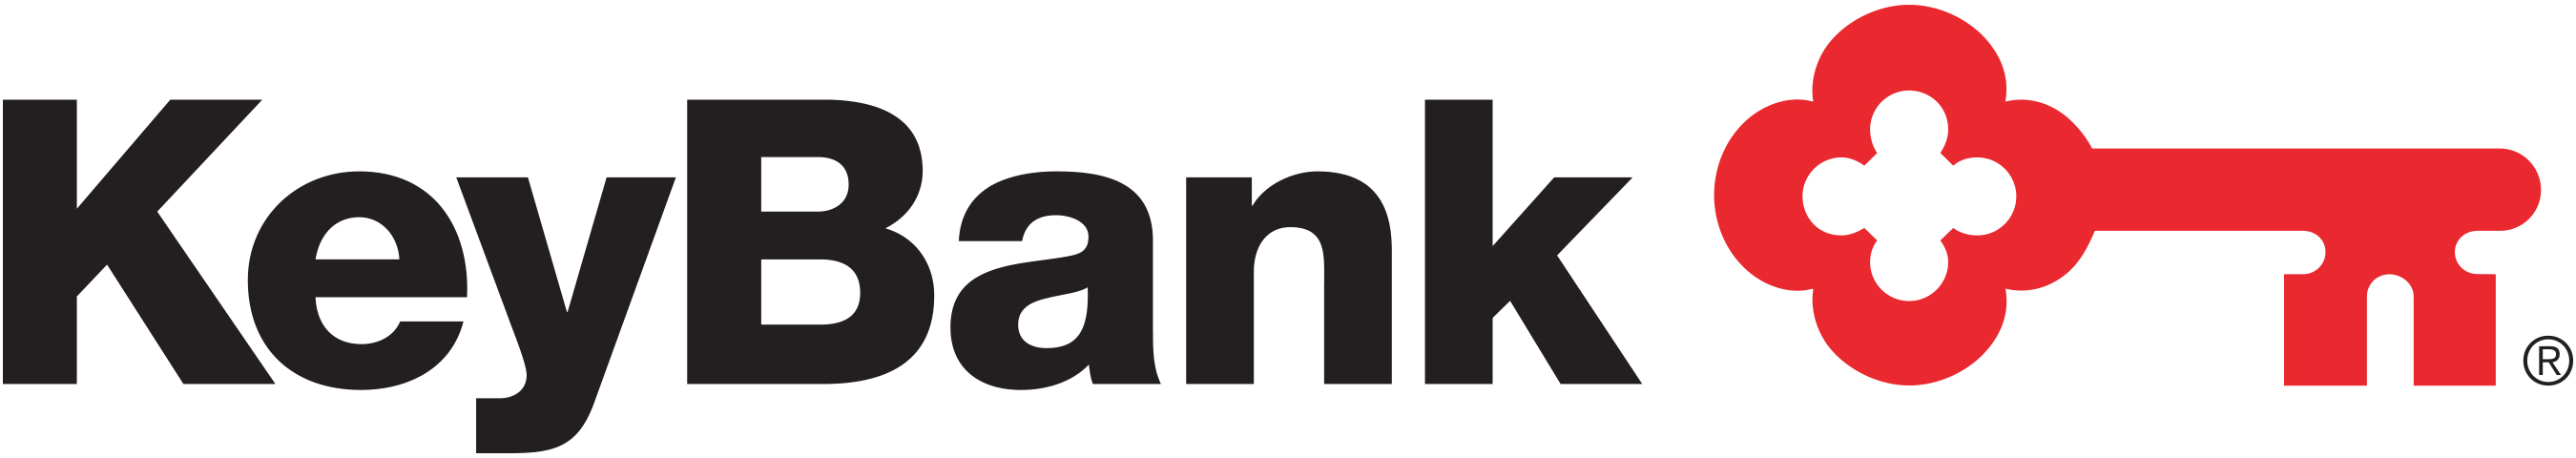 KeyBank Brand Logo